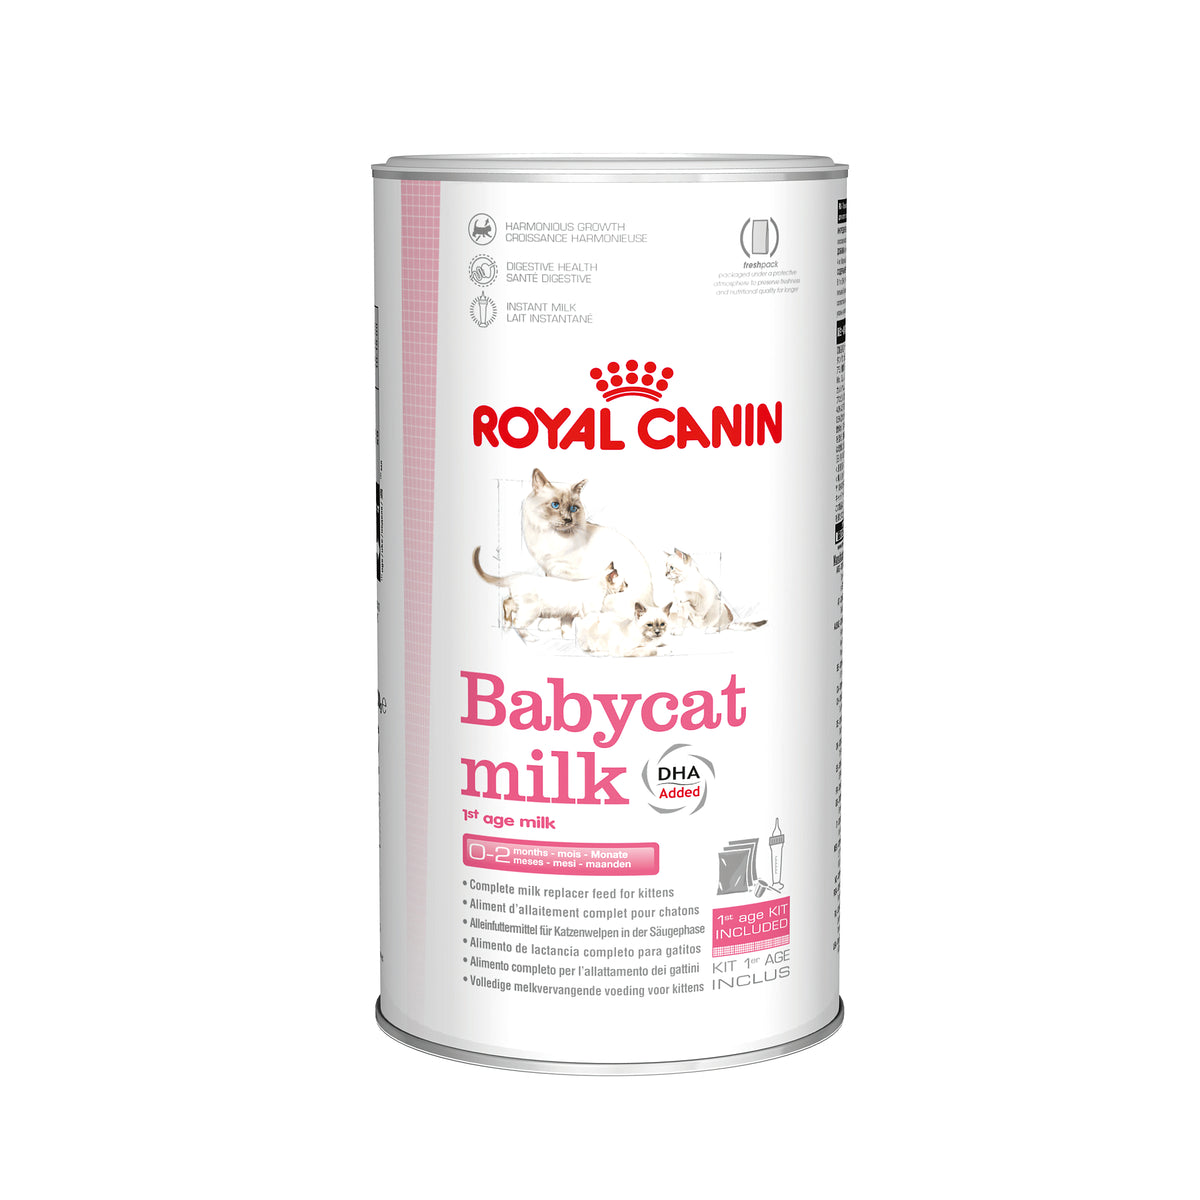 Royal Canin Babycat Milk- Milk Replacer for Kittens (300g)